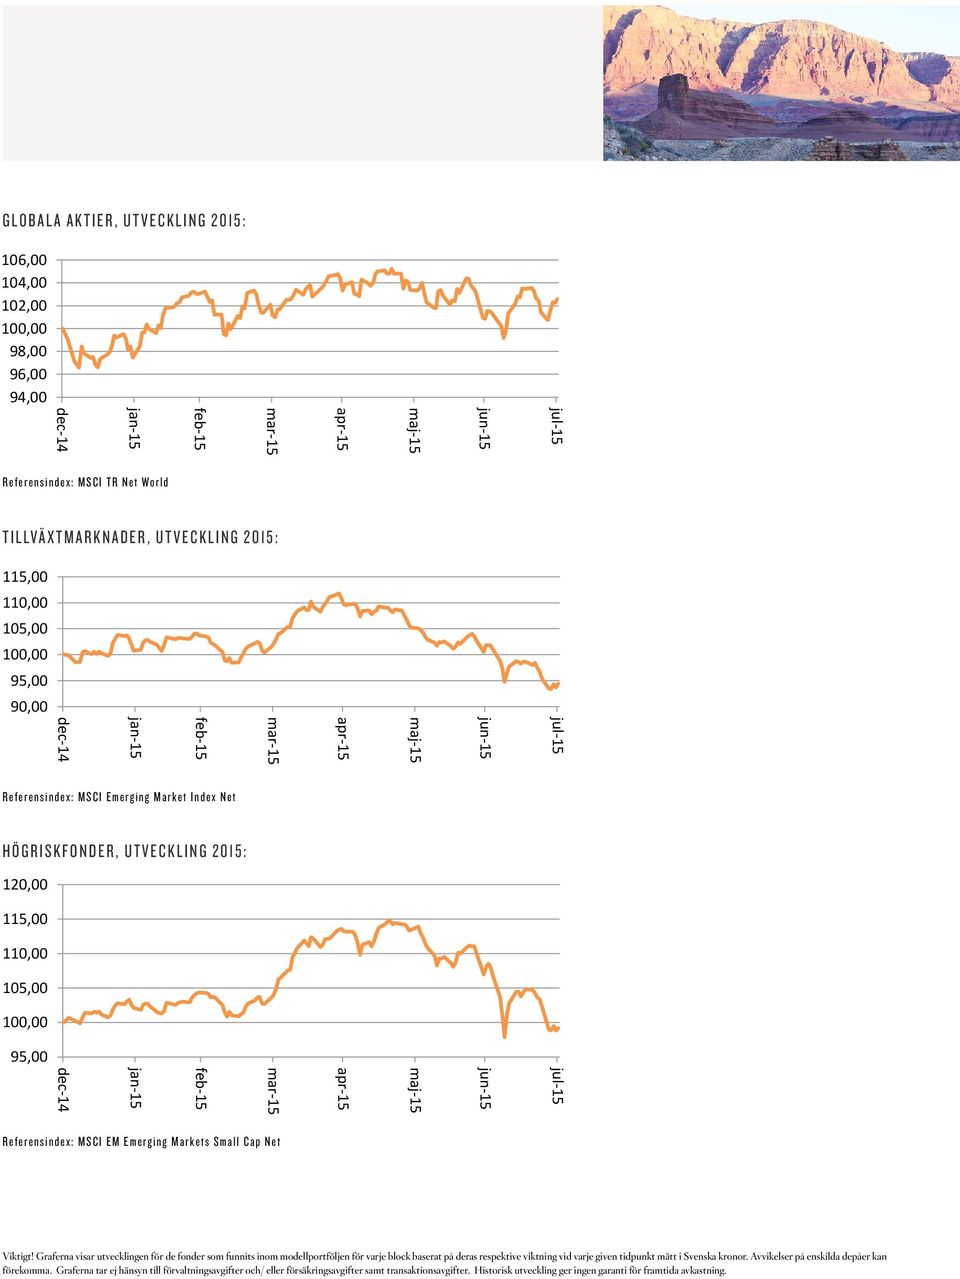 Index Market Net Index Net Högriskfonder Referensindex: MSCI Emerging Market Index Net Högriskfonder Högriskfonder HÖGRISKFONDER, UTVECKLING 2015: 120,00 120,00 120,00 115,00 115,00 115,00 110,00